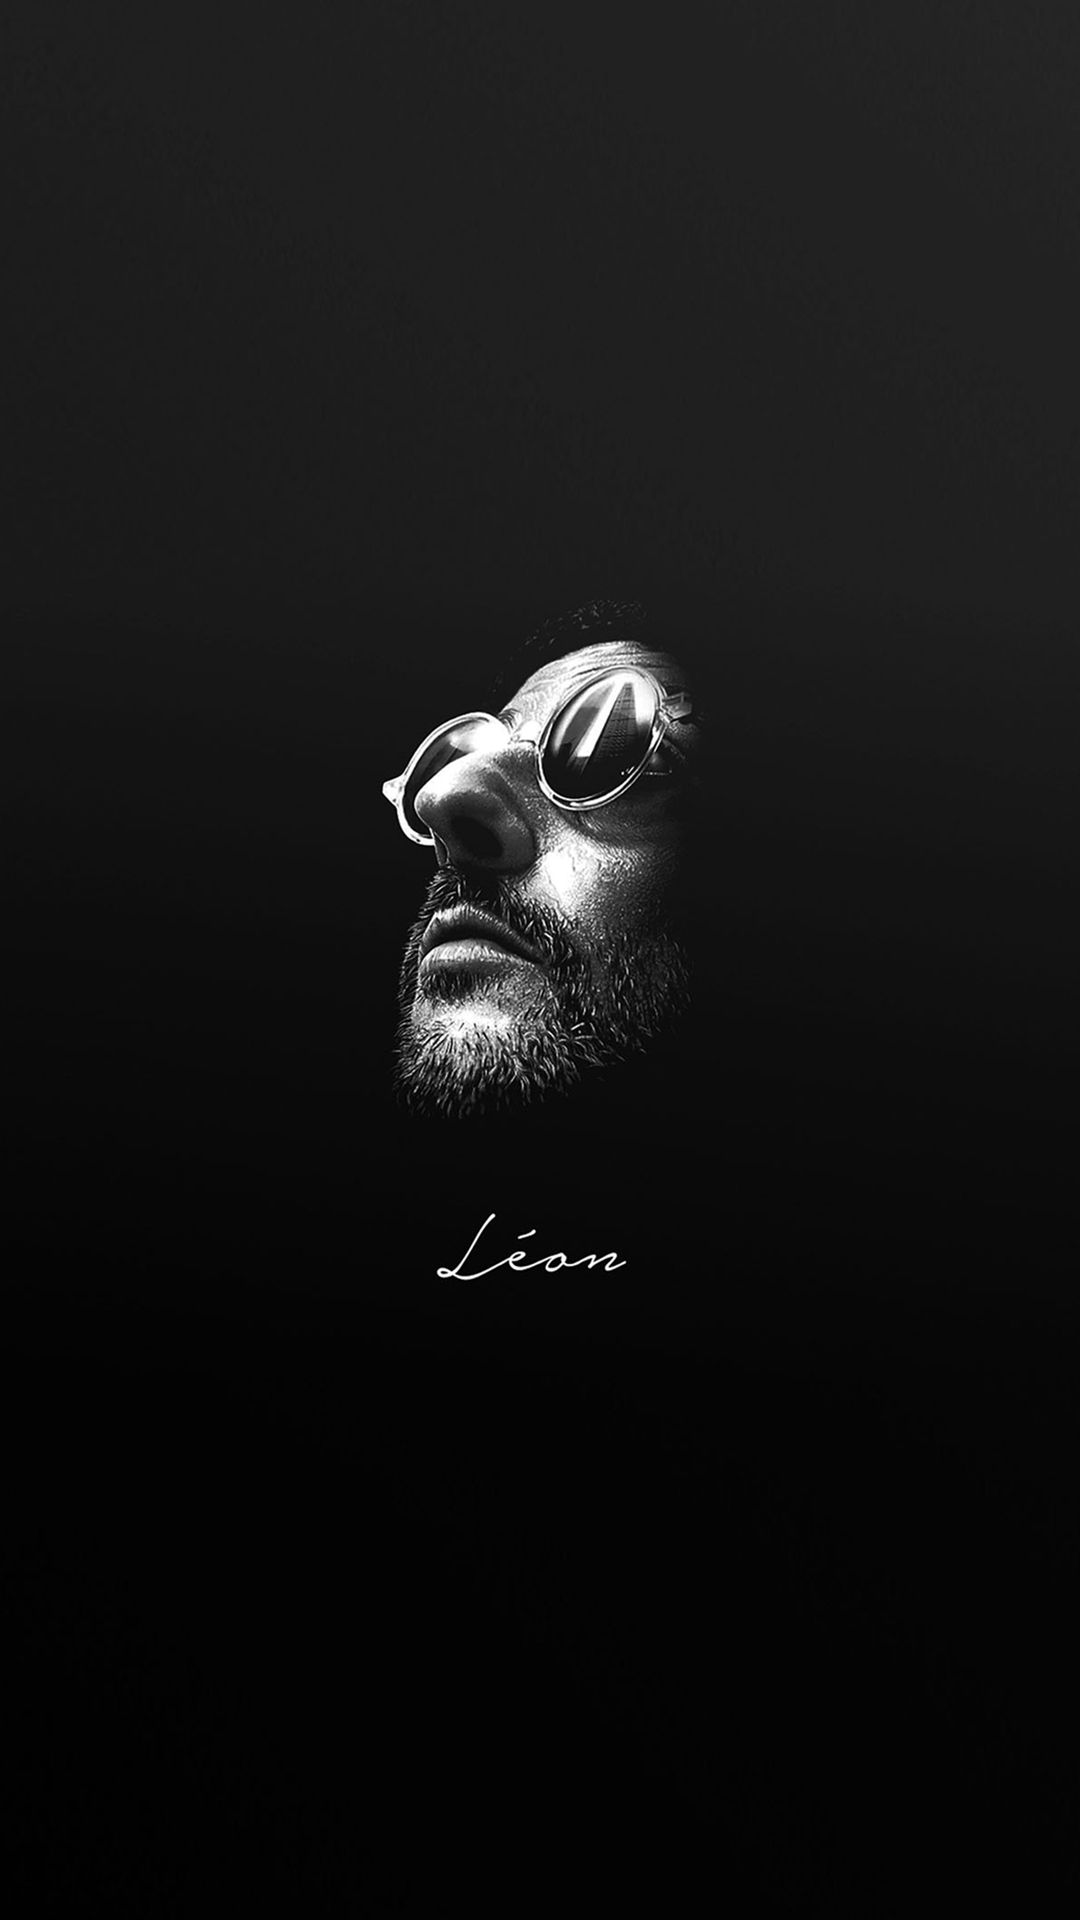 Leon Face Minimal Simple Art iPhone 8 Wallpaper Free Download